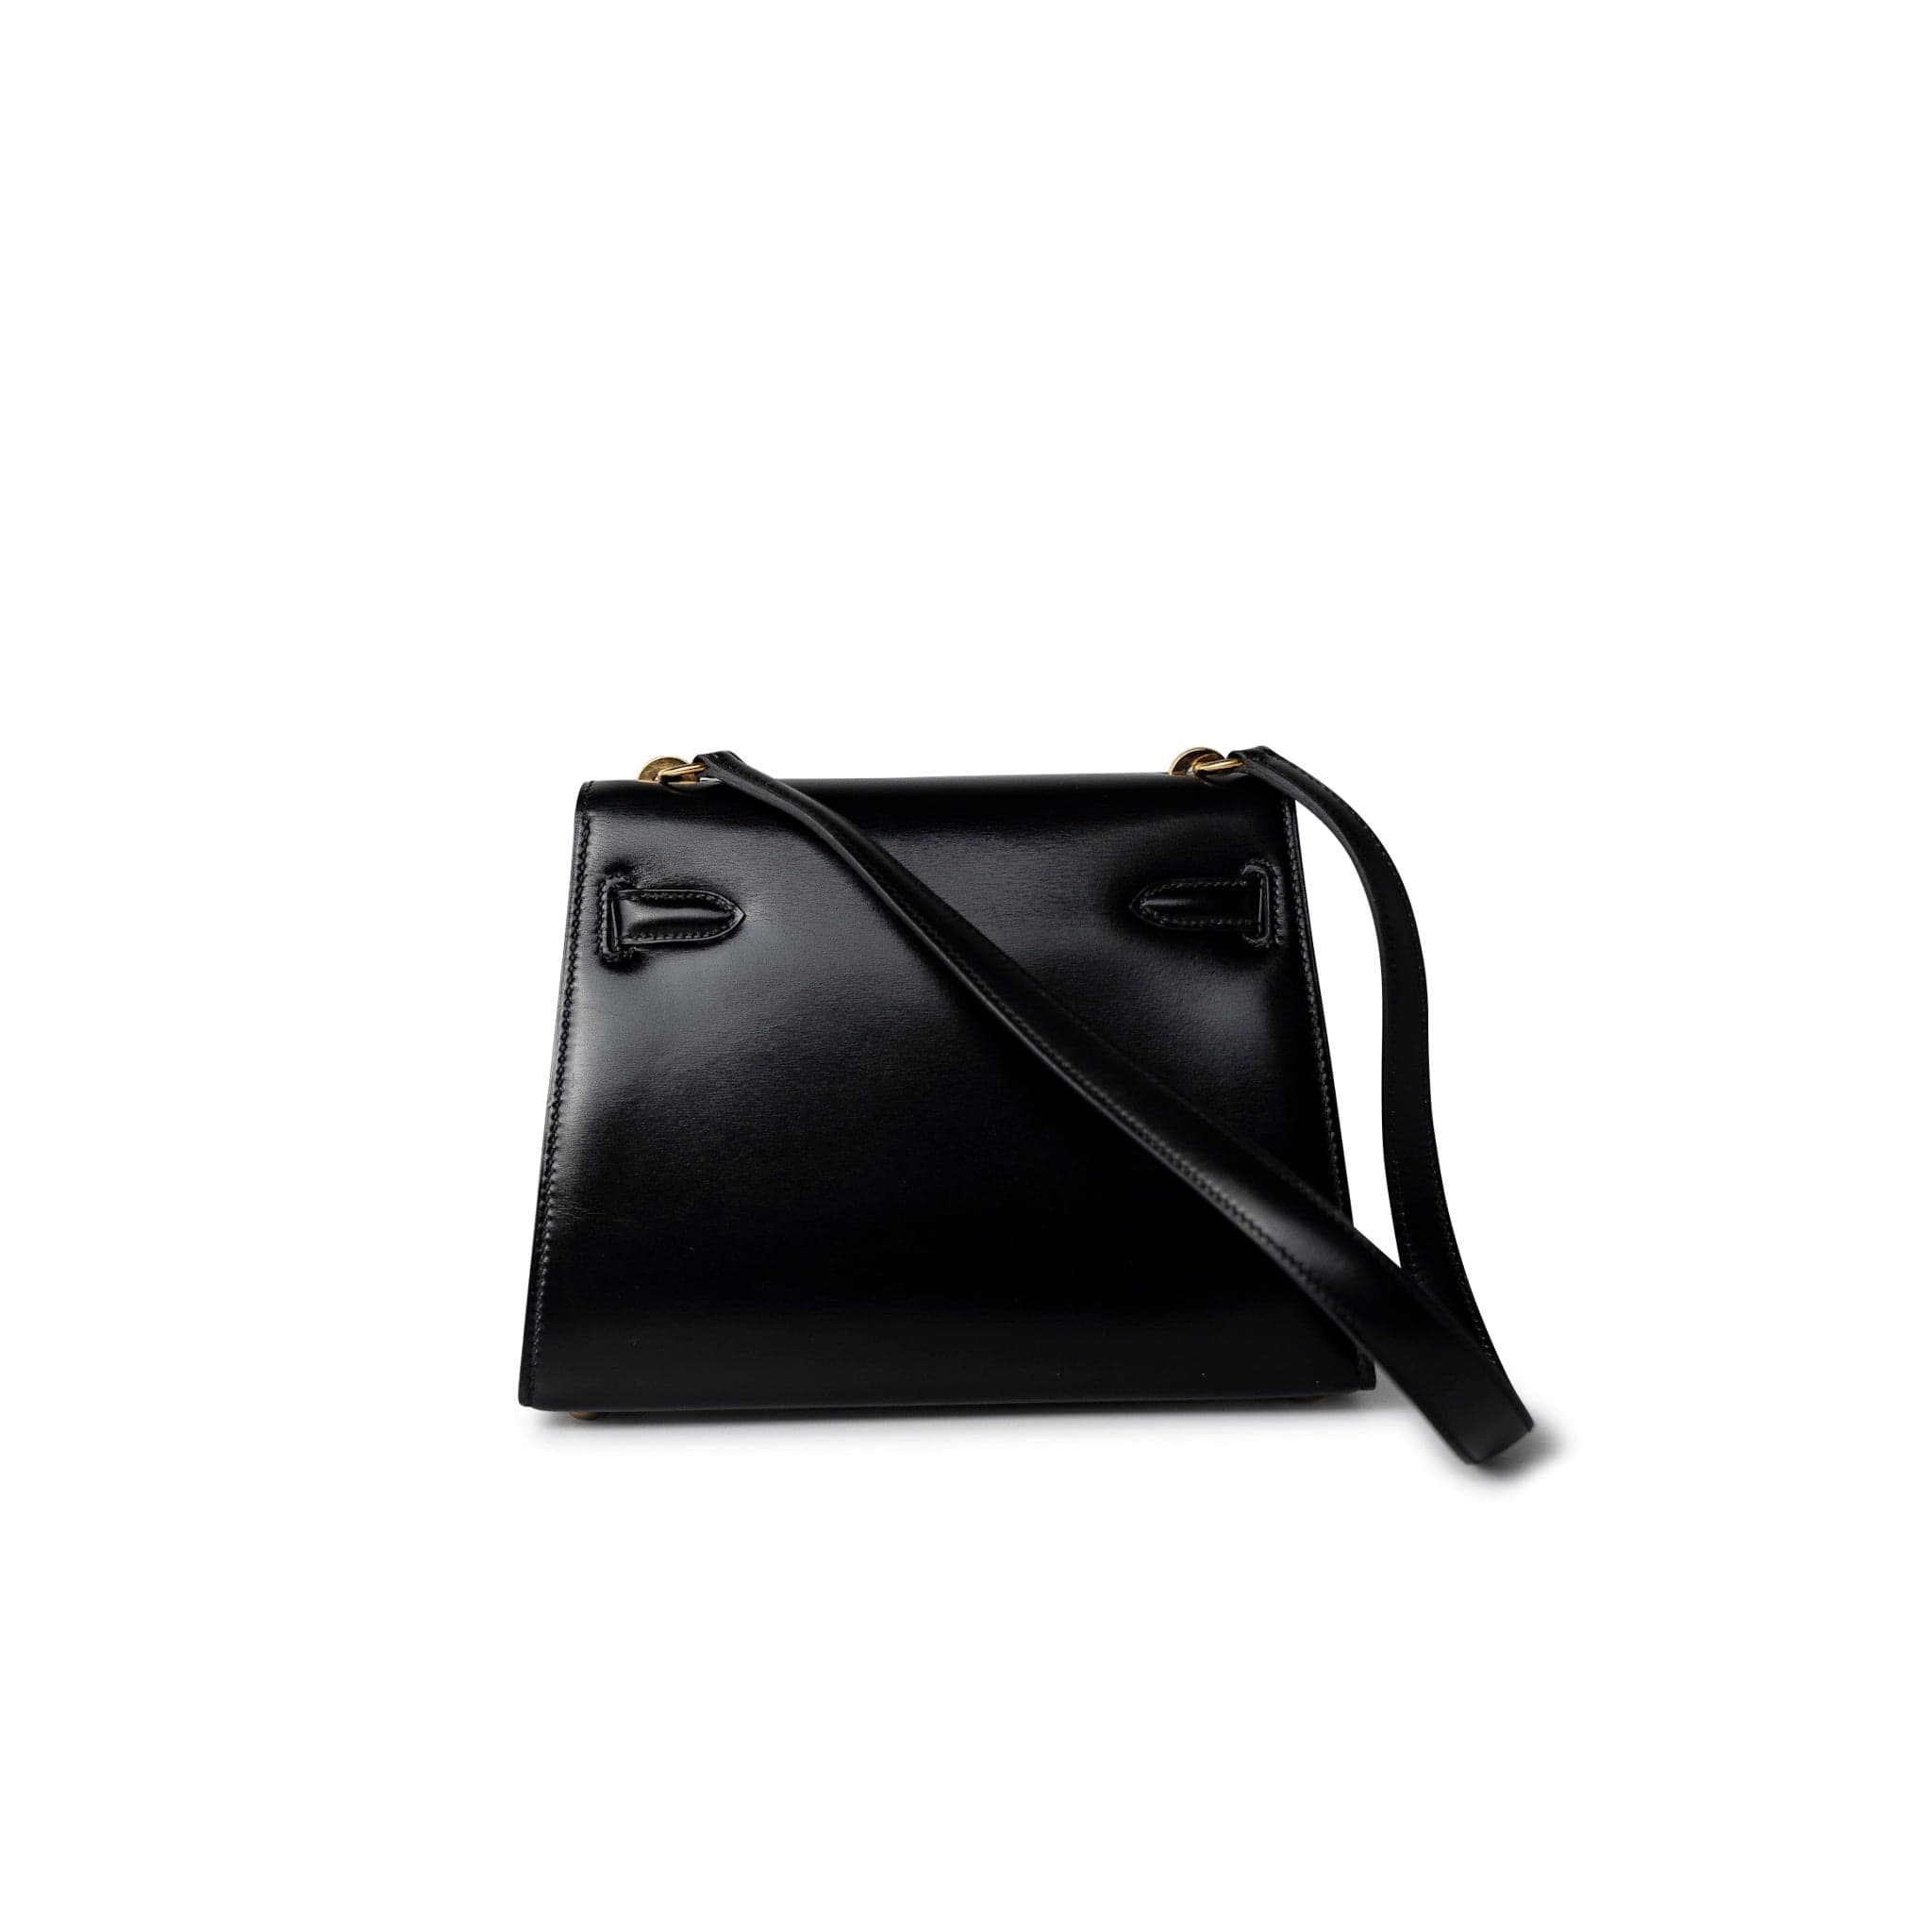 Hermès Haut à Courroies: The Original Birkin Bag | Handbags and Accessories  | Sotheby's